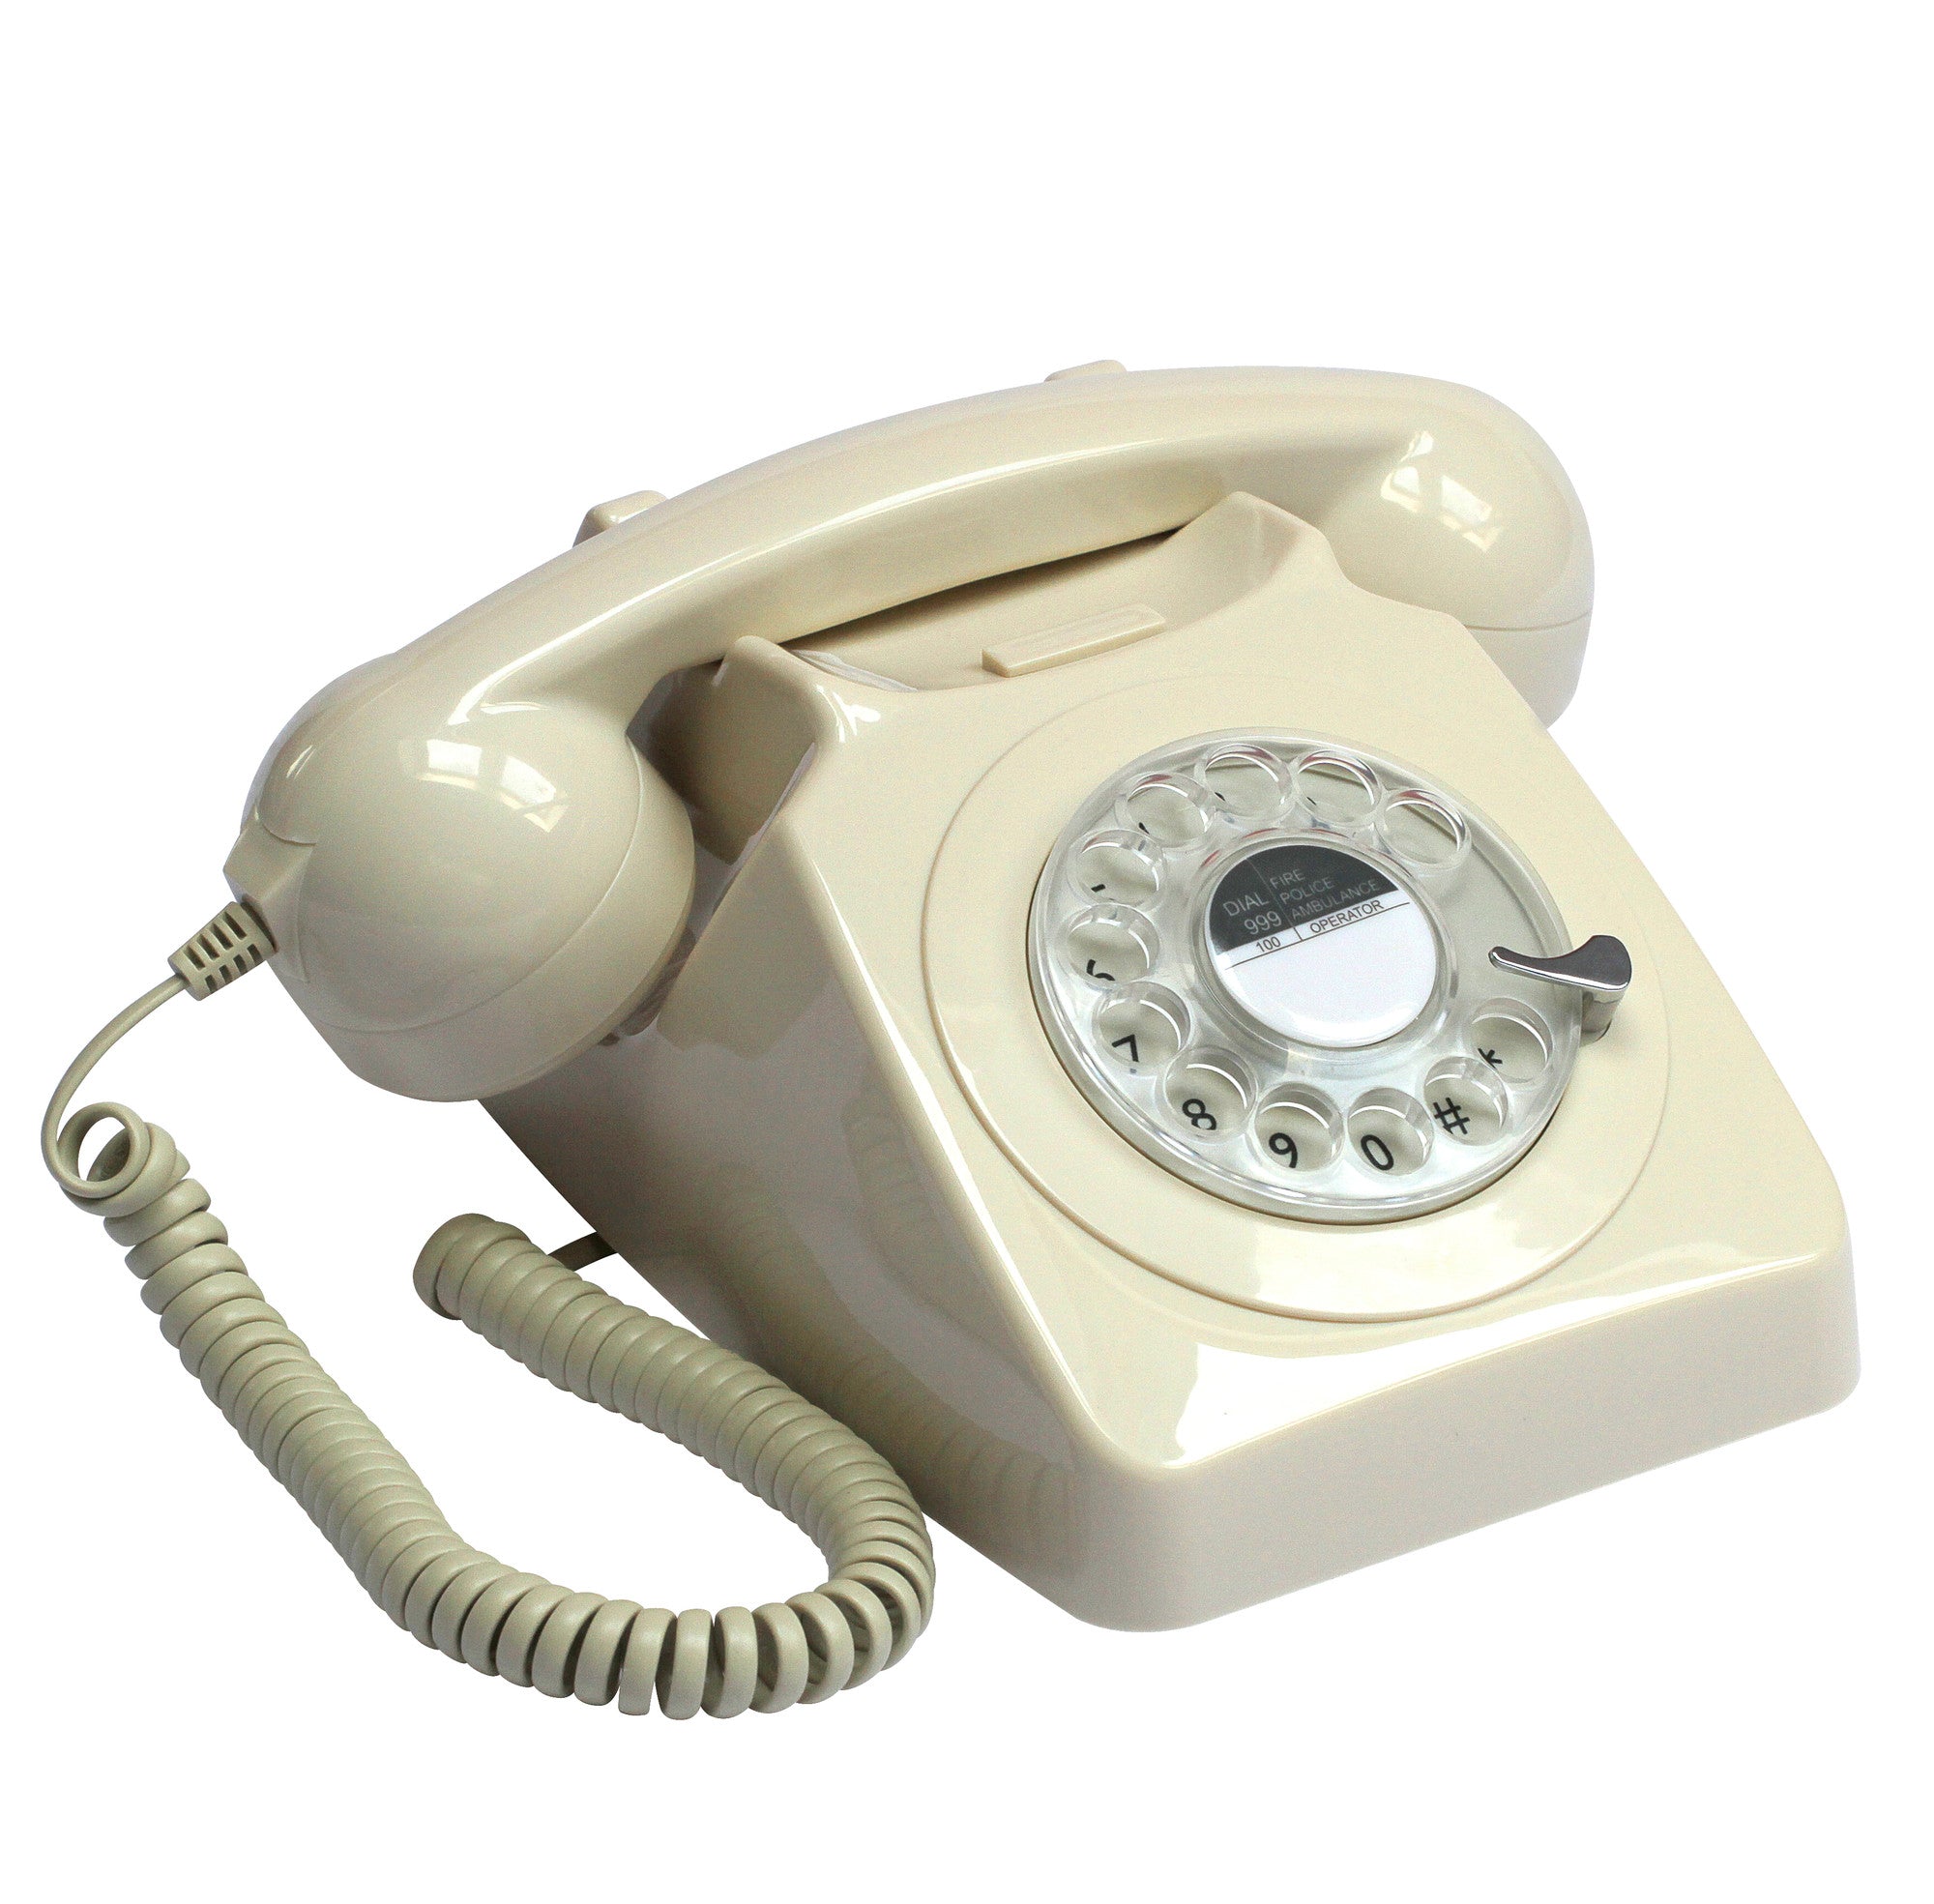 GPO 746 ROTARY TELEPHONE - IVORY 2